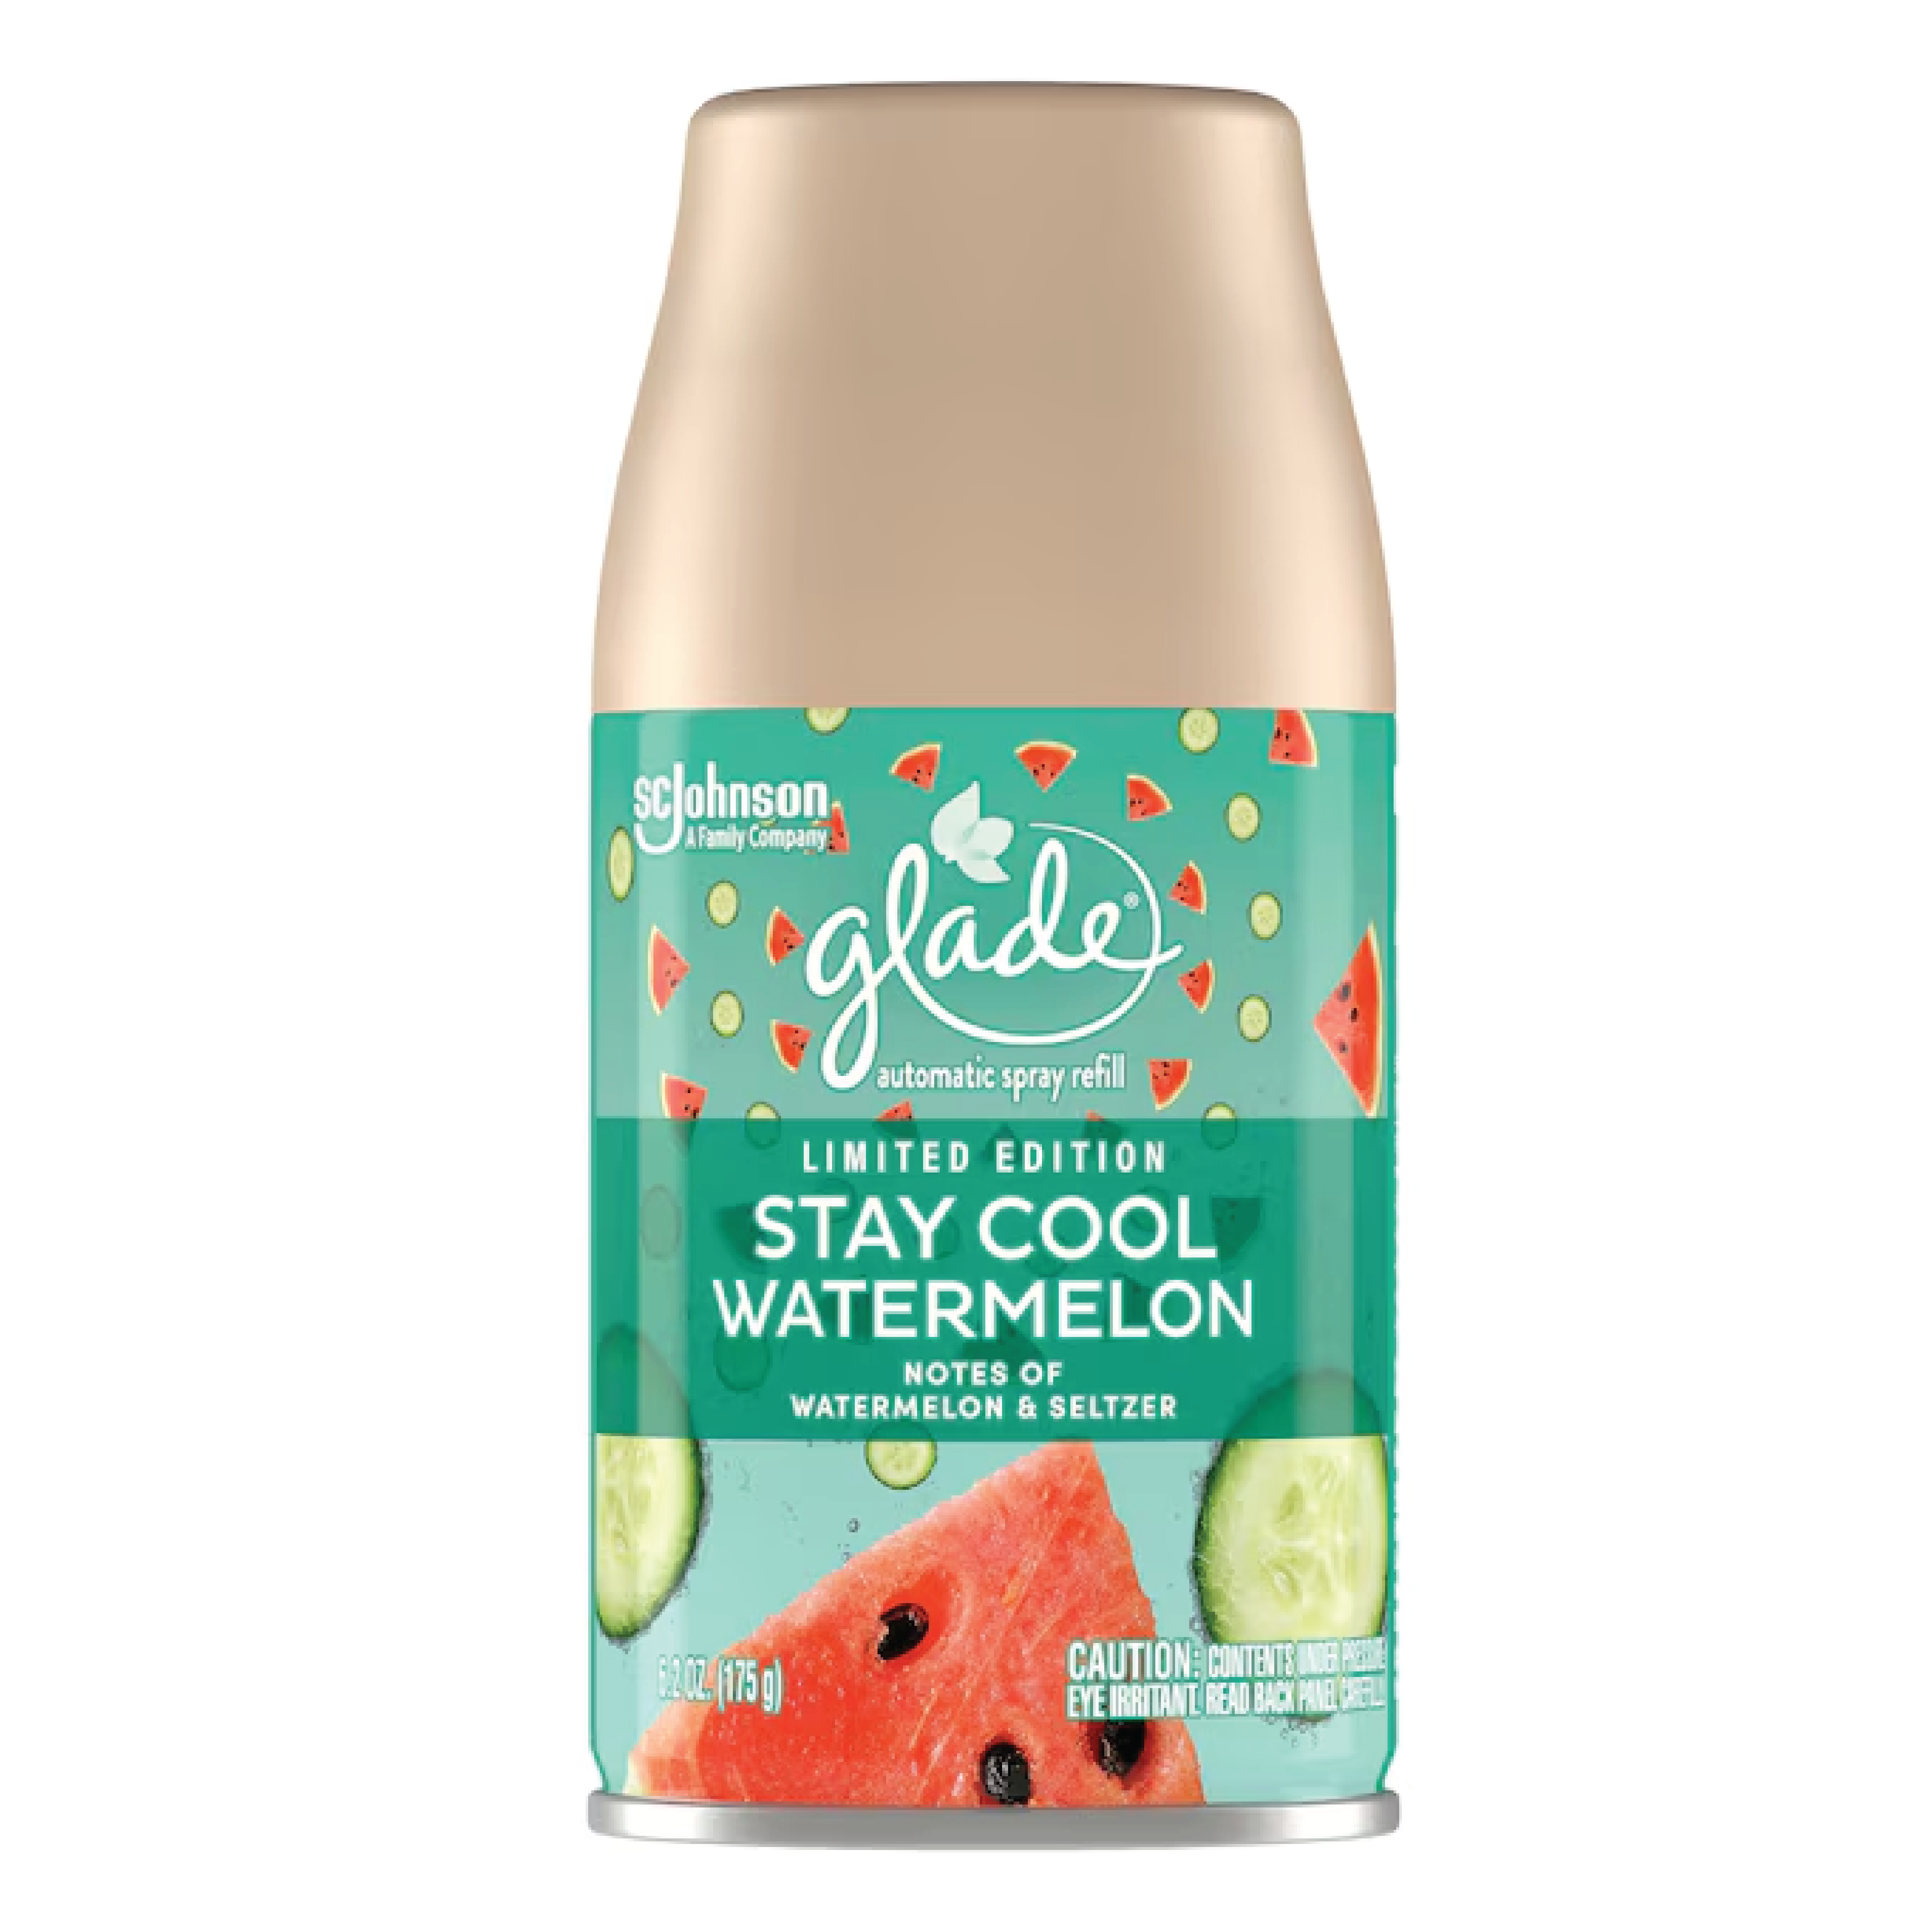 Glade Limited Edition Stay Cool Watermelon Air Freshener Spray Refill 6.2oz